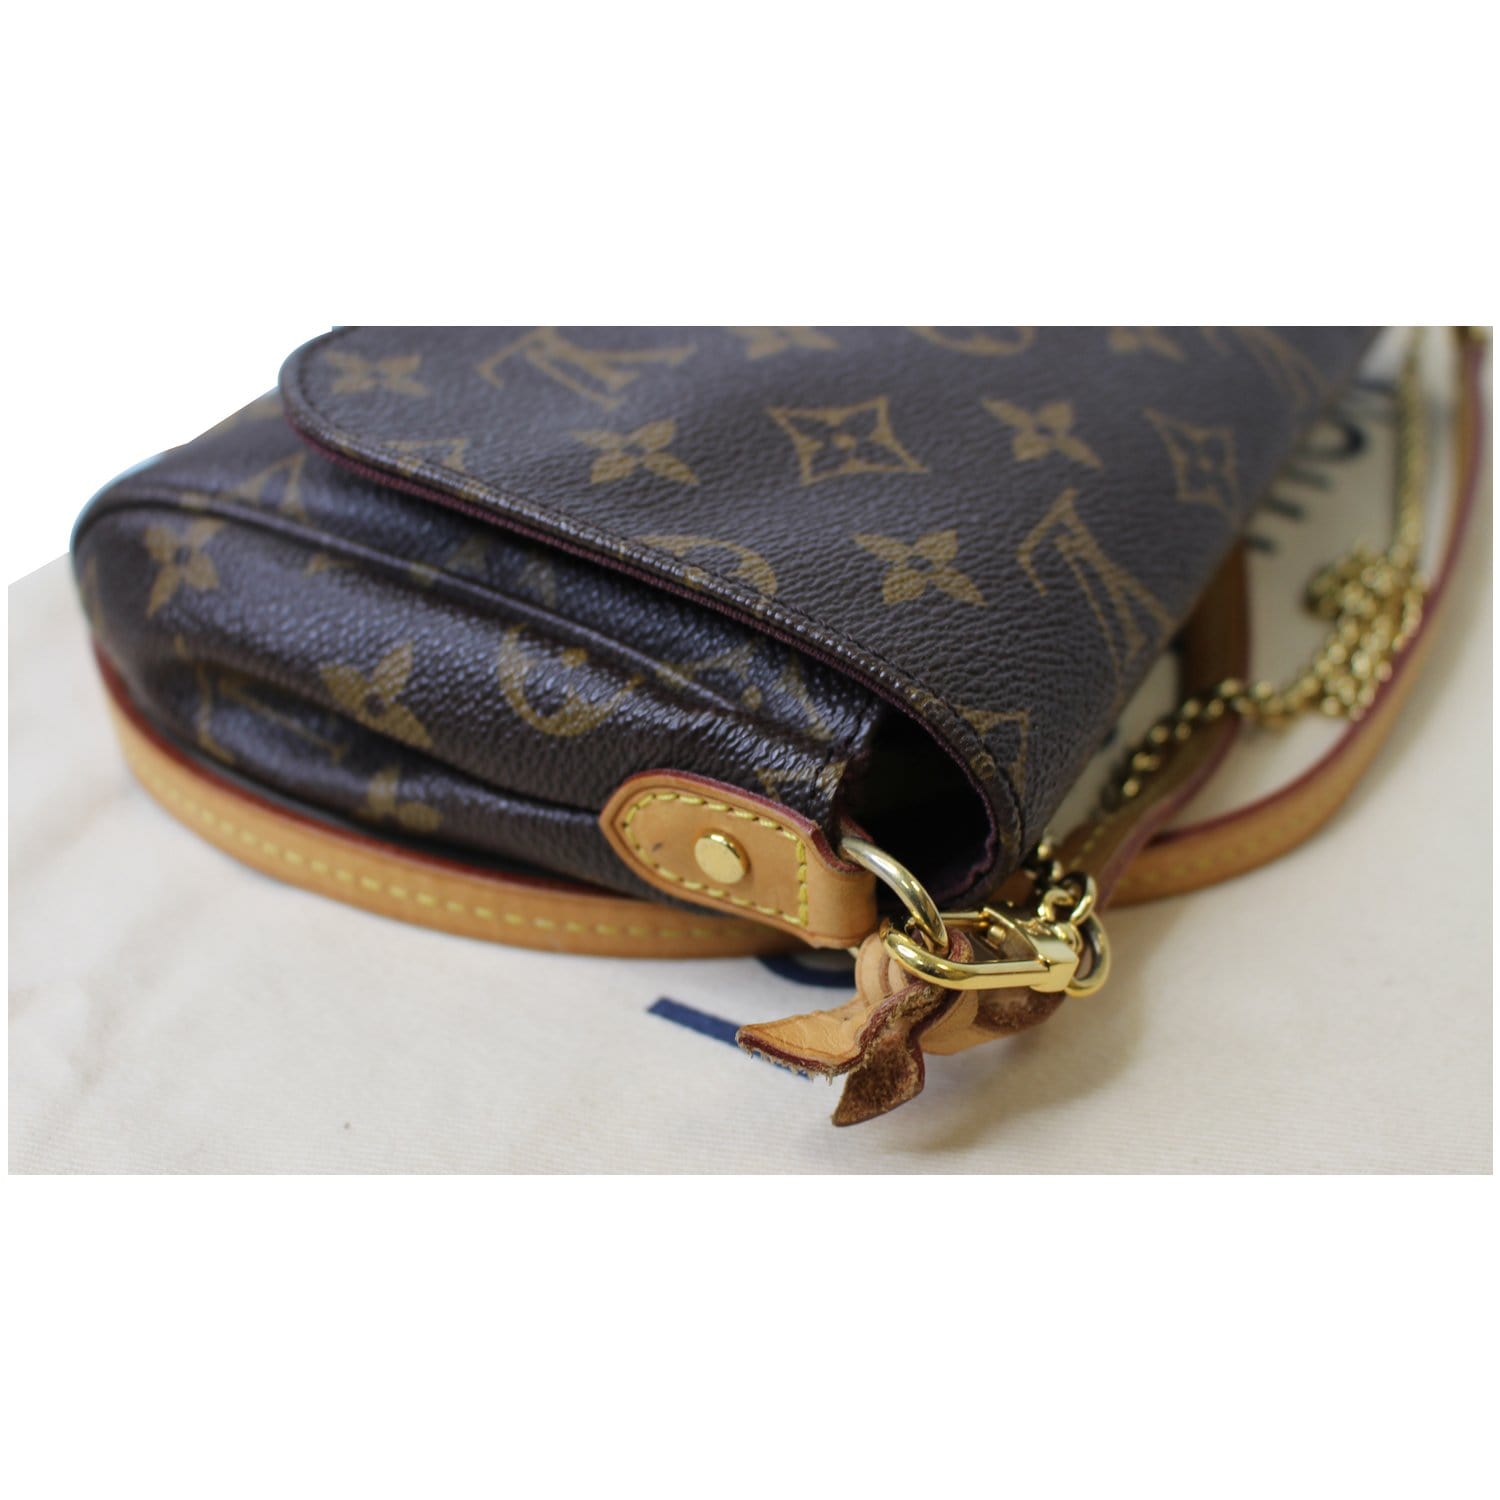 Louis Vuitton, Bags, Lv Favorite Monogram Mm Size